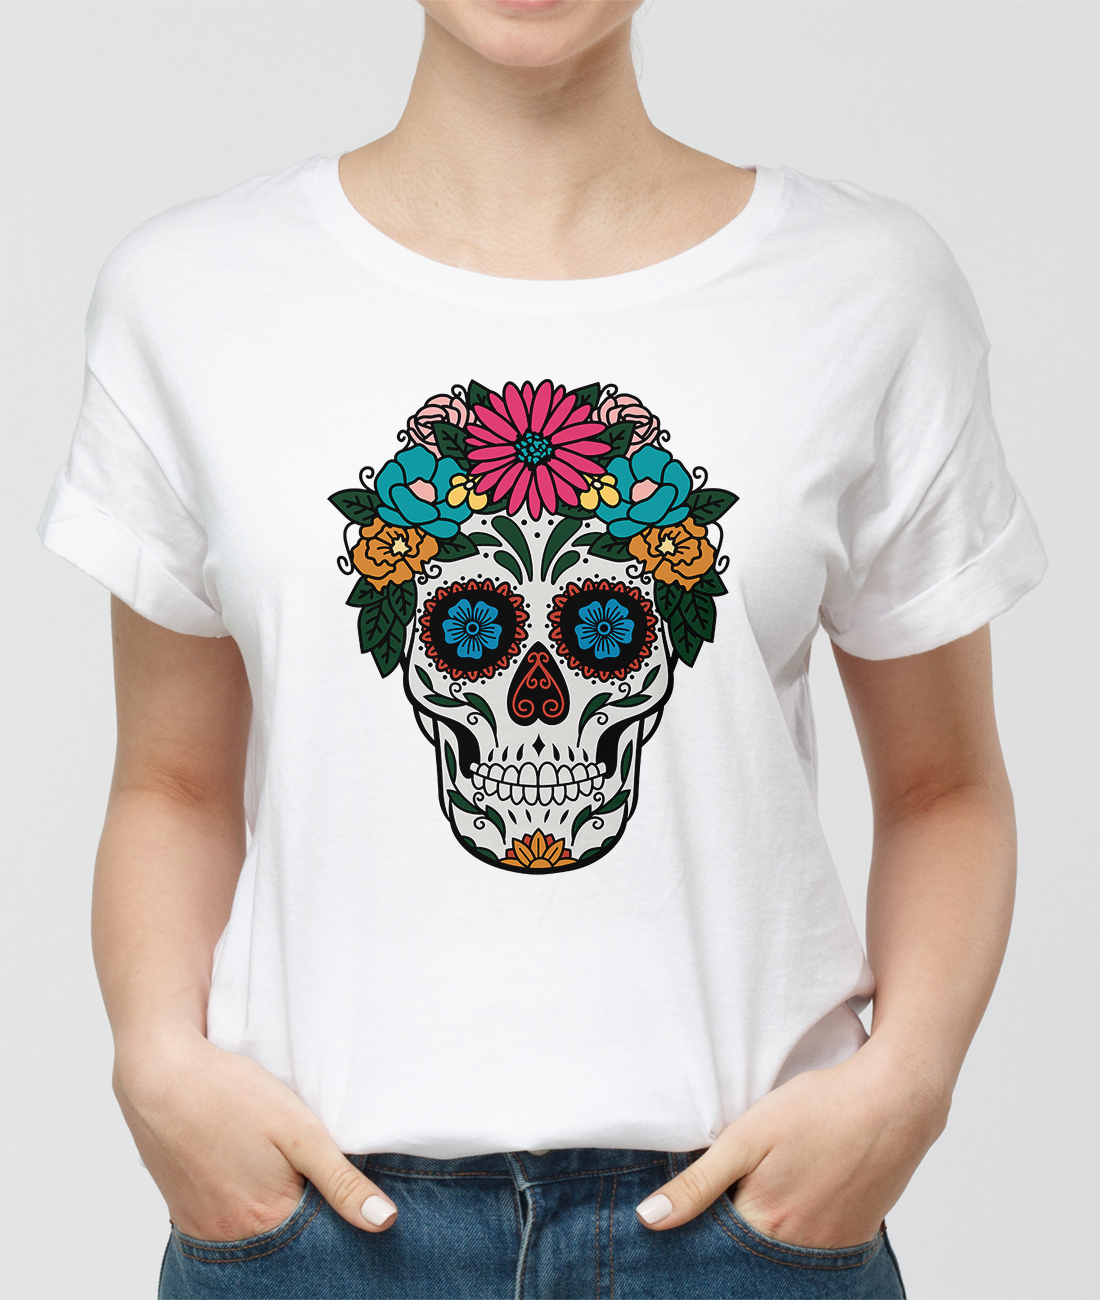 women tshirt with a skull